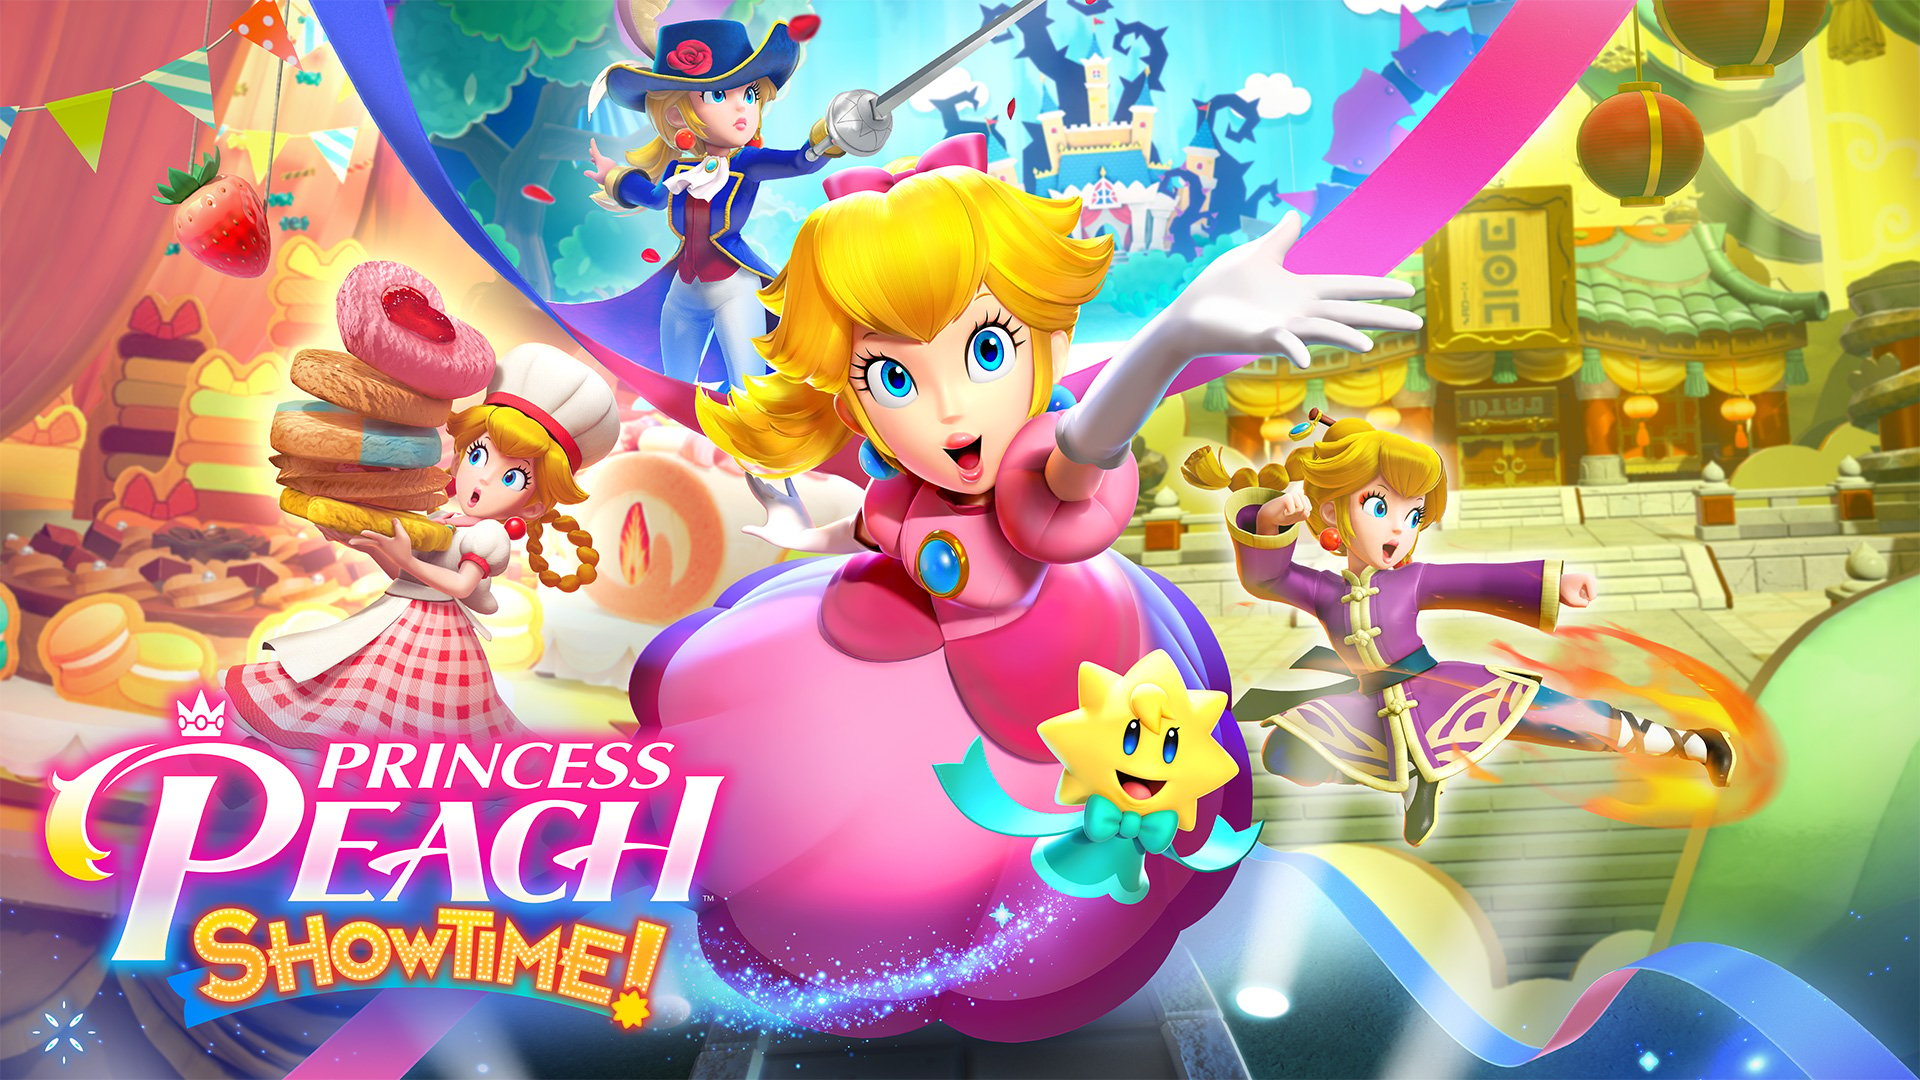 Princess Peach game announced for Switch - Gematsu